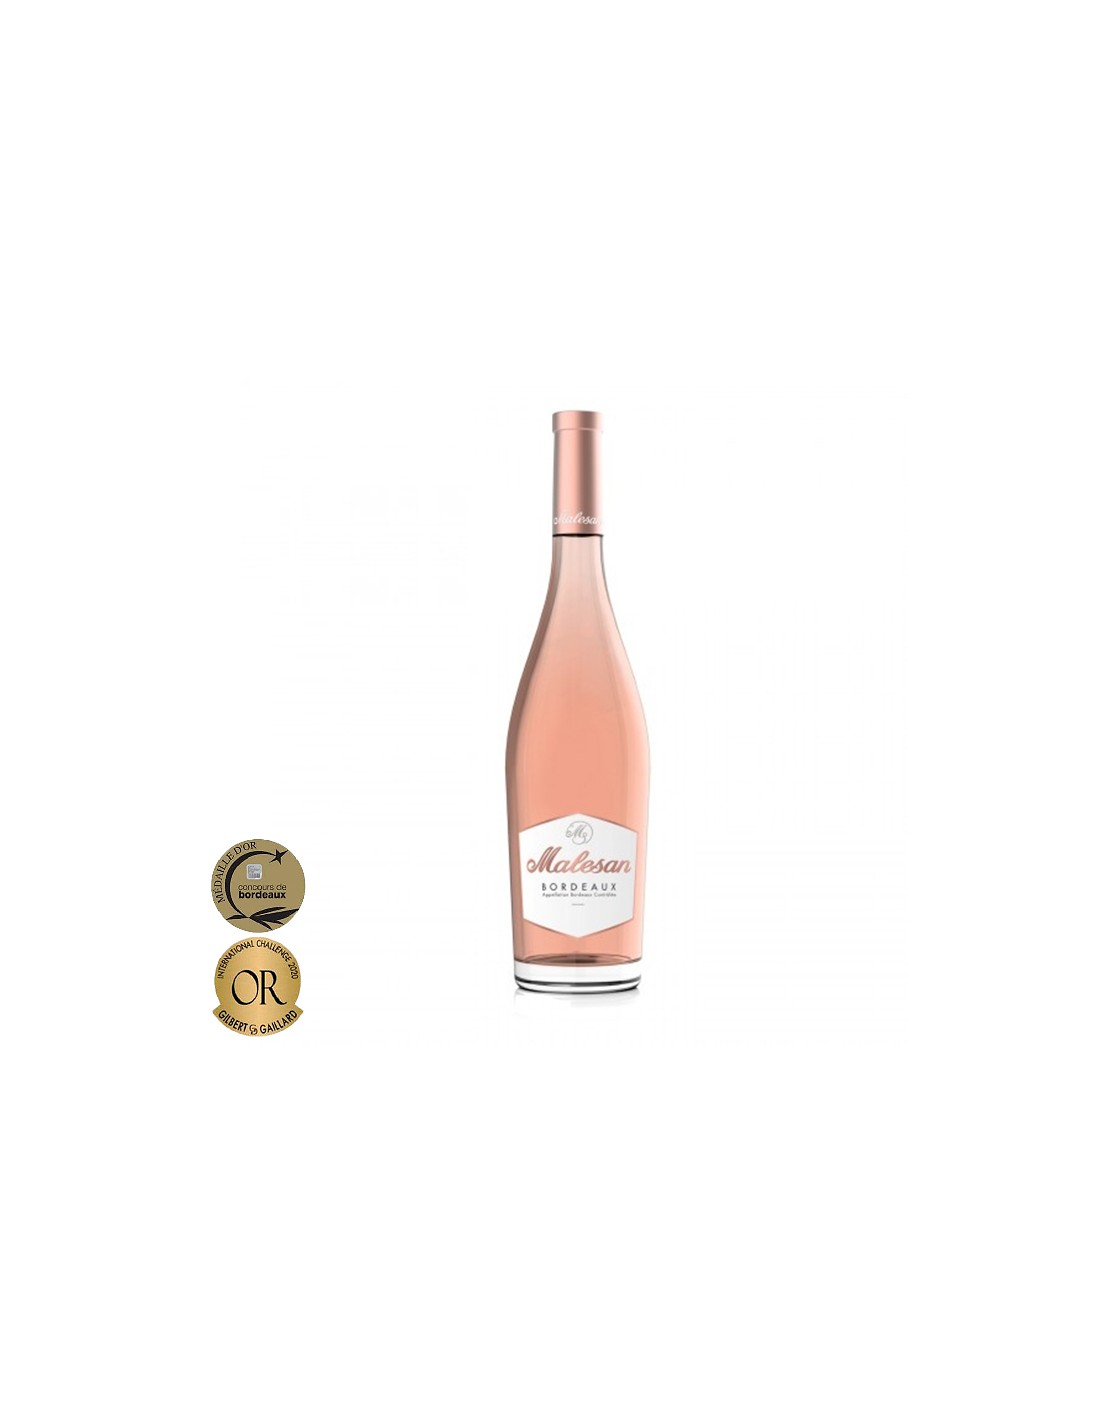 Vin roze sec, Malesan Bordeaux, 12.5% alc., 0.75L, Franta alcooldiscount.ro